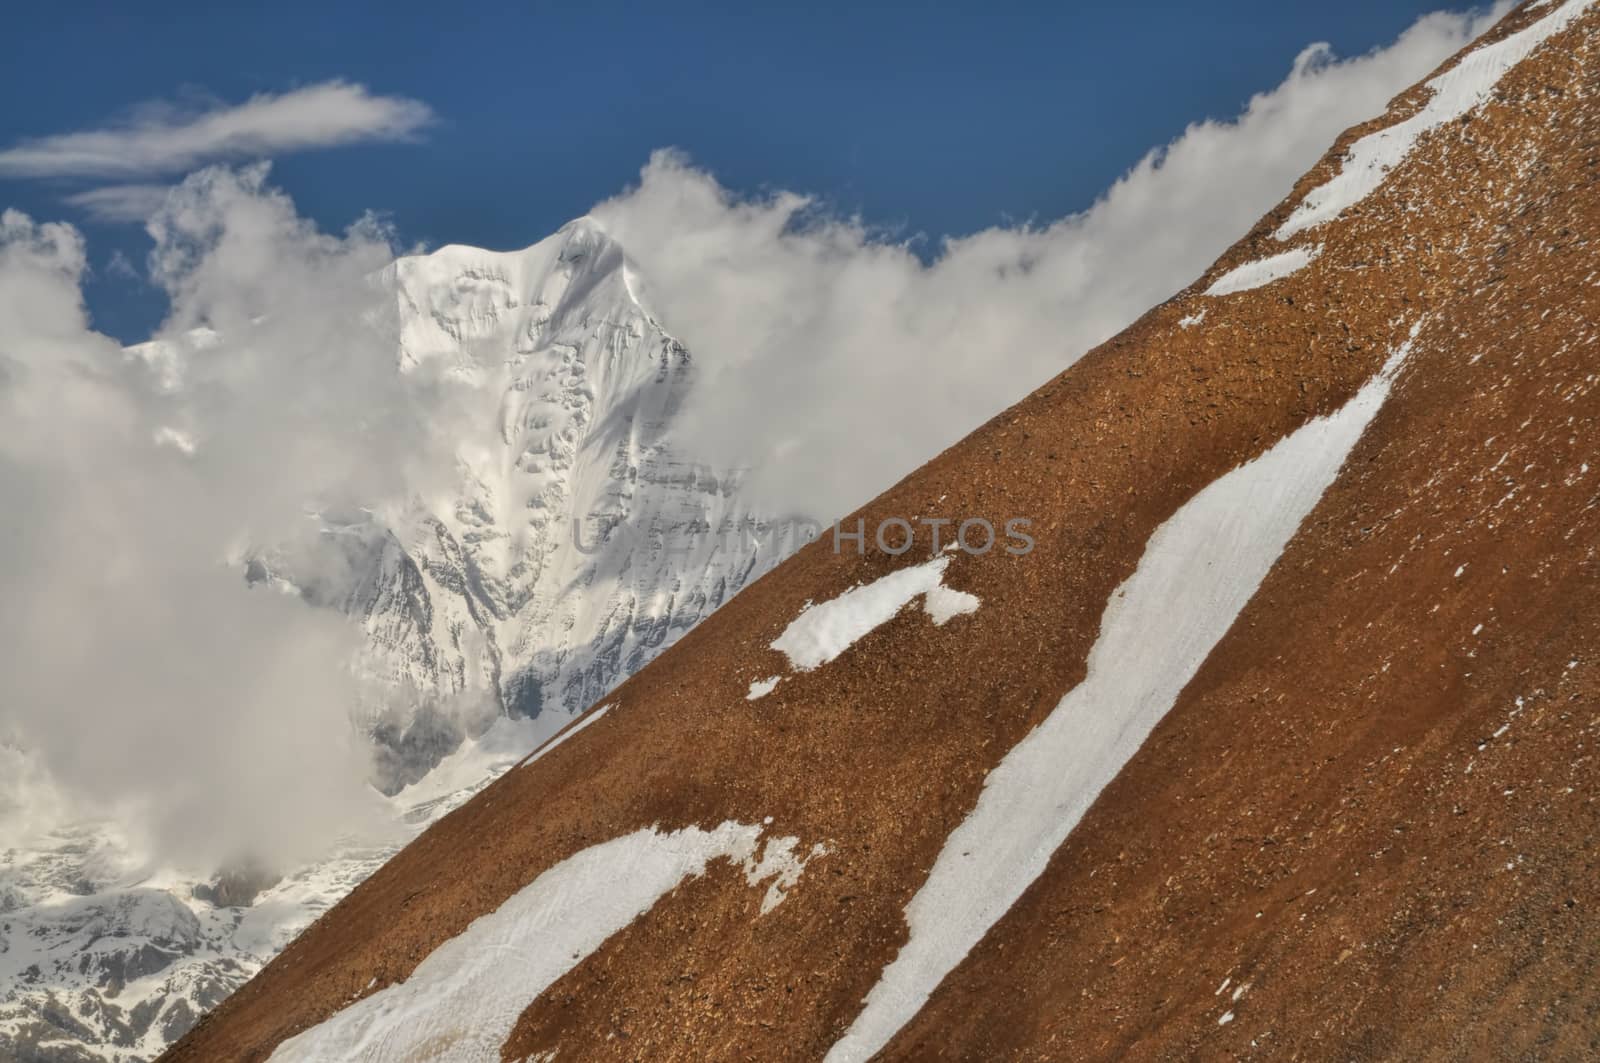 Slope in Himalayas by MichalKnitl